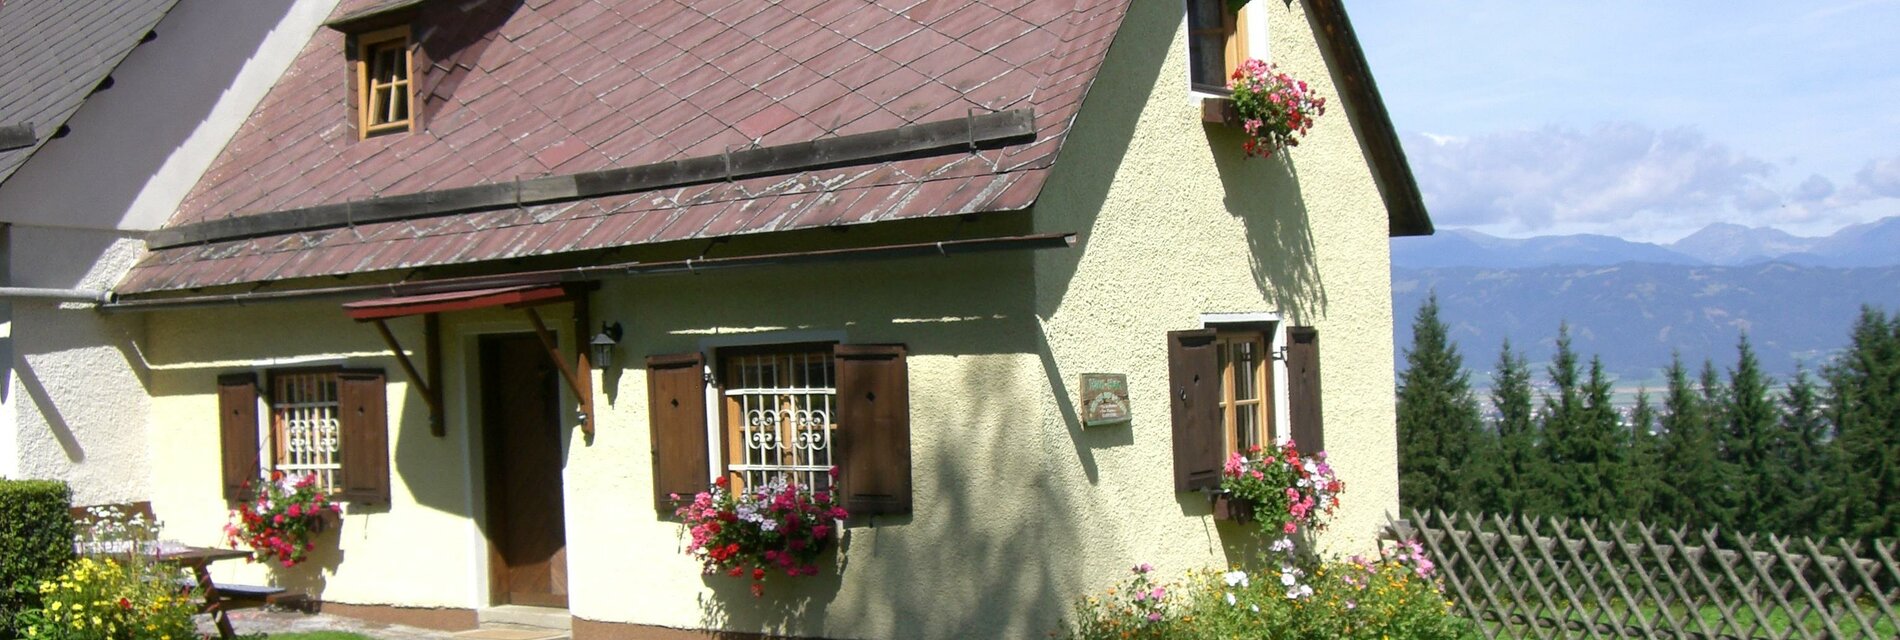 Hadn Hube-Weißkirchen-Murtal-Steiermark